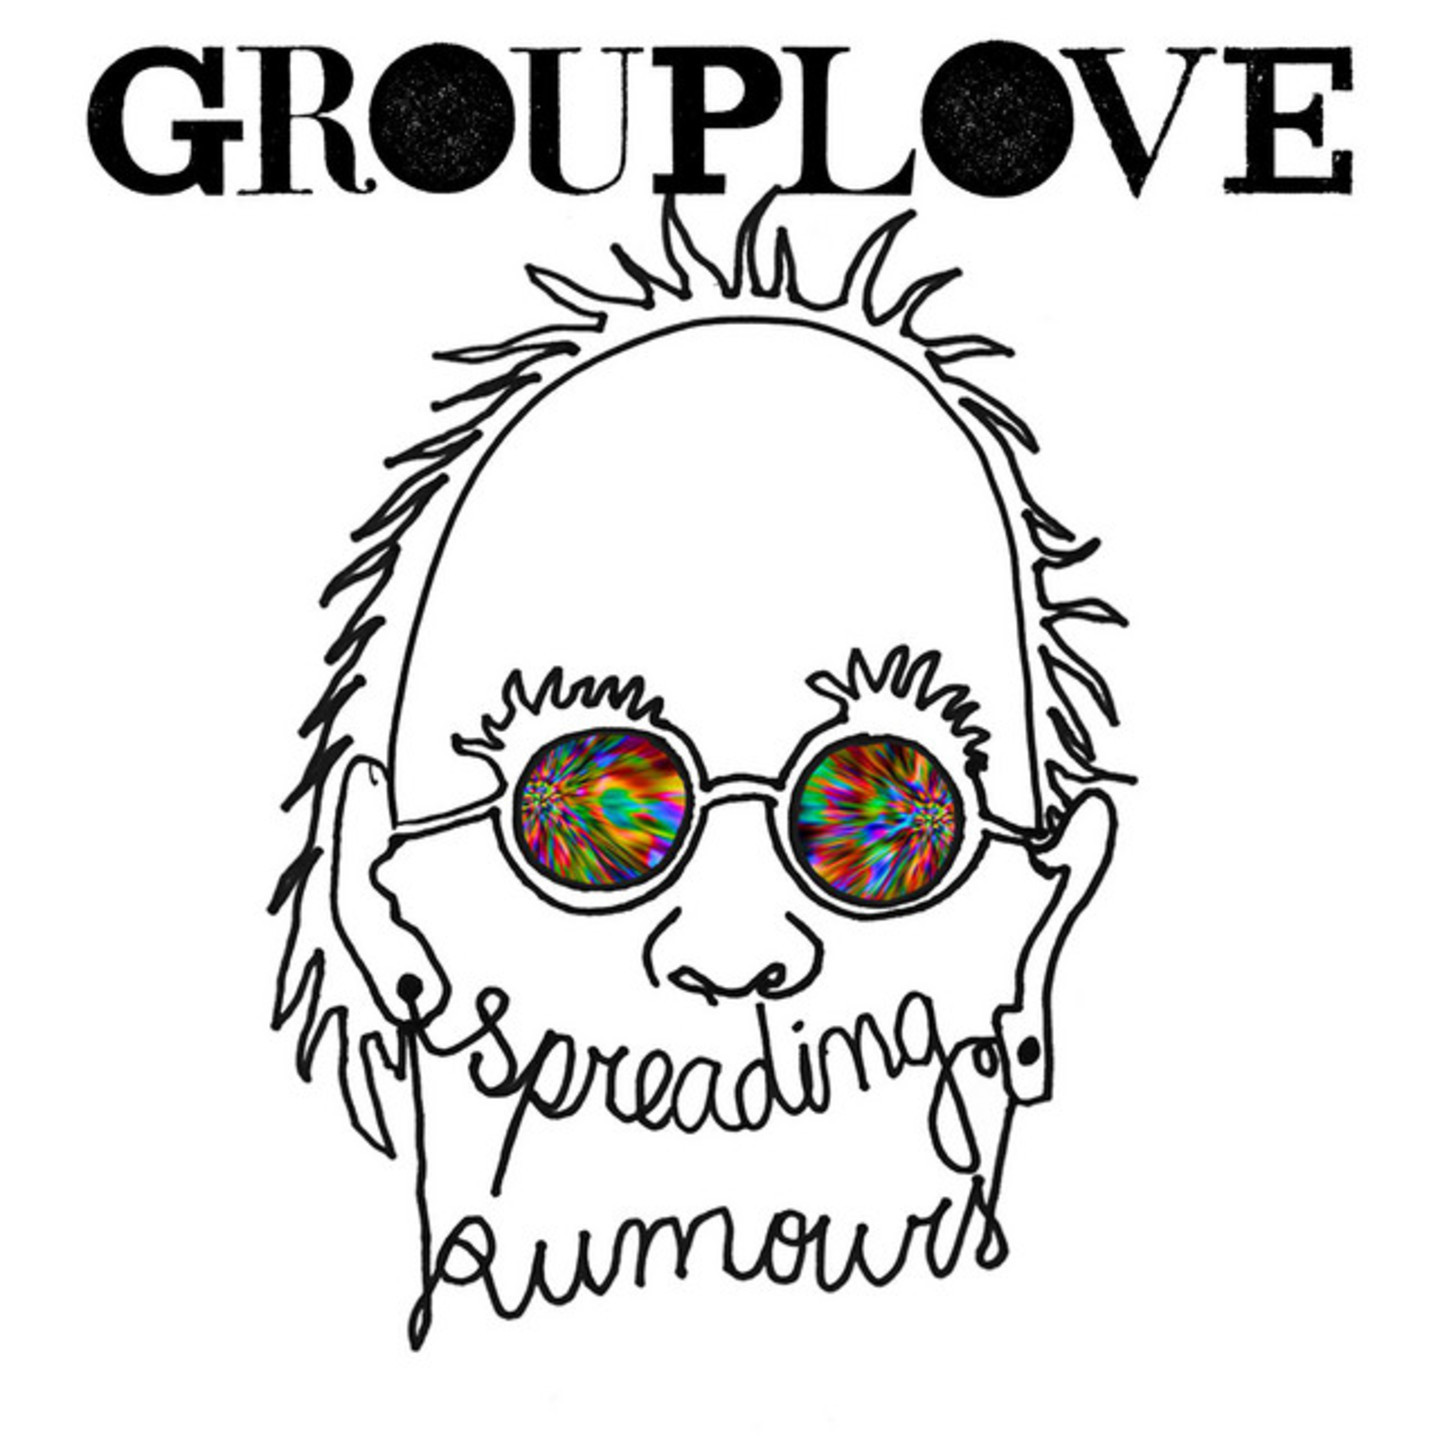 GROUPLOVE - Spreading Rumours LP